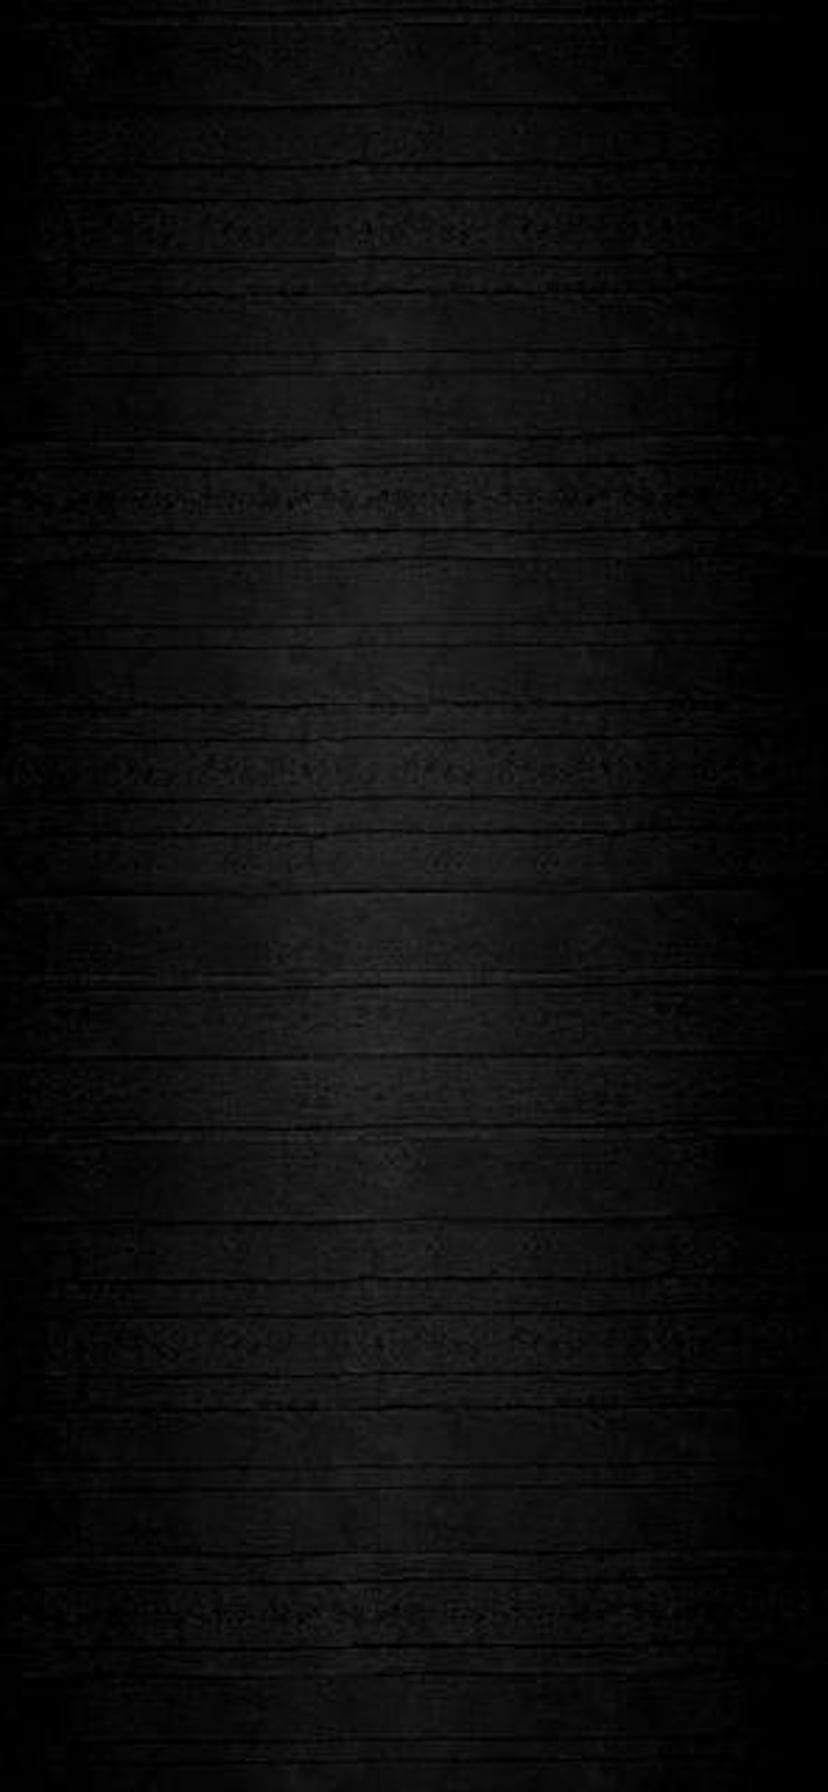 1 Dark Wallpaper HD for iPhone XS Max, iPhone XS, iPhone XR